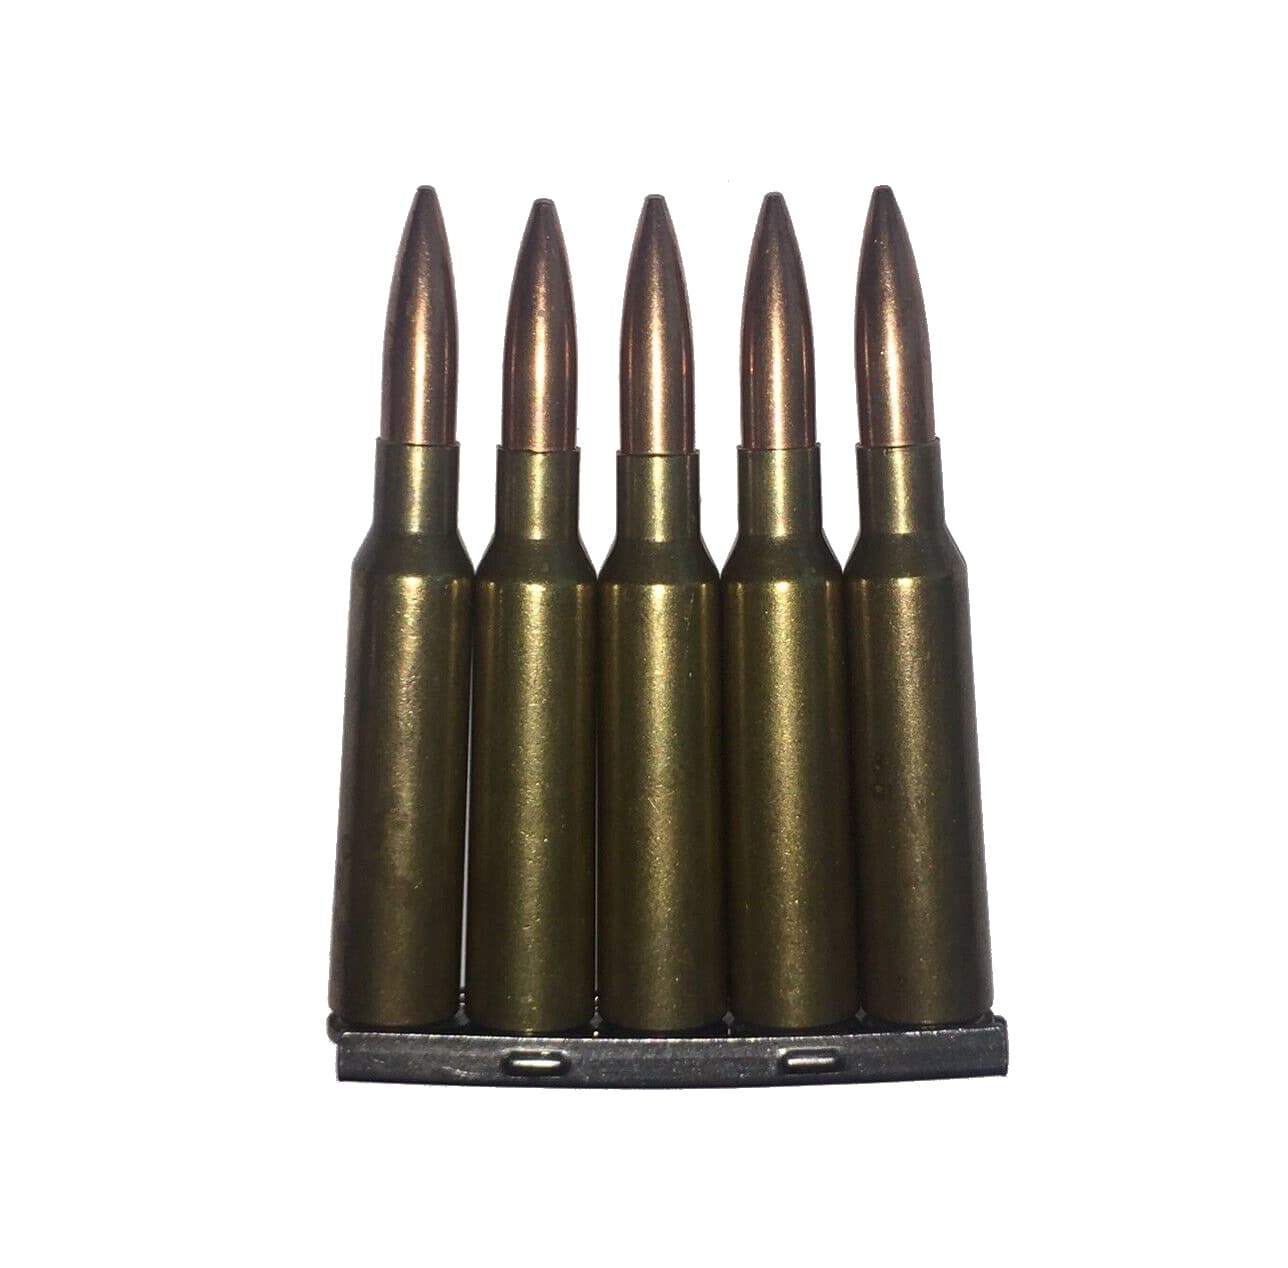 6.5x55 Swedish Mauser Dummy Rounds Snap Caps Fake Bullets in Swede Stripper Clip J&M Spec INERT